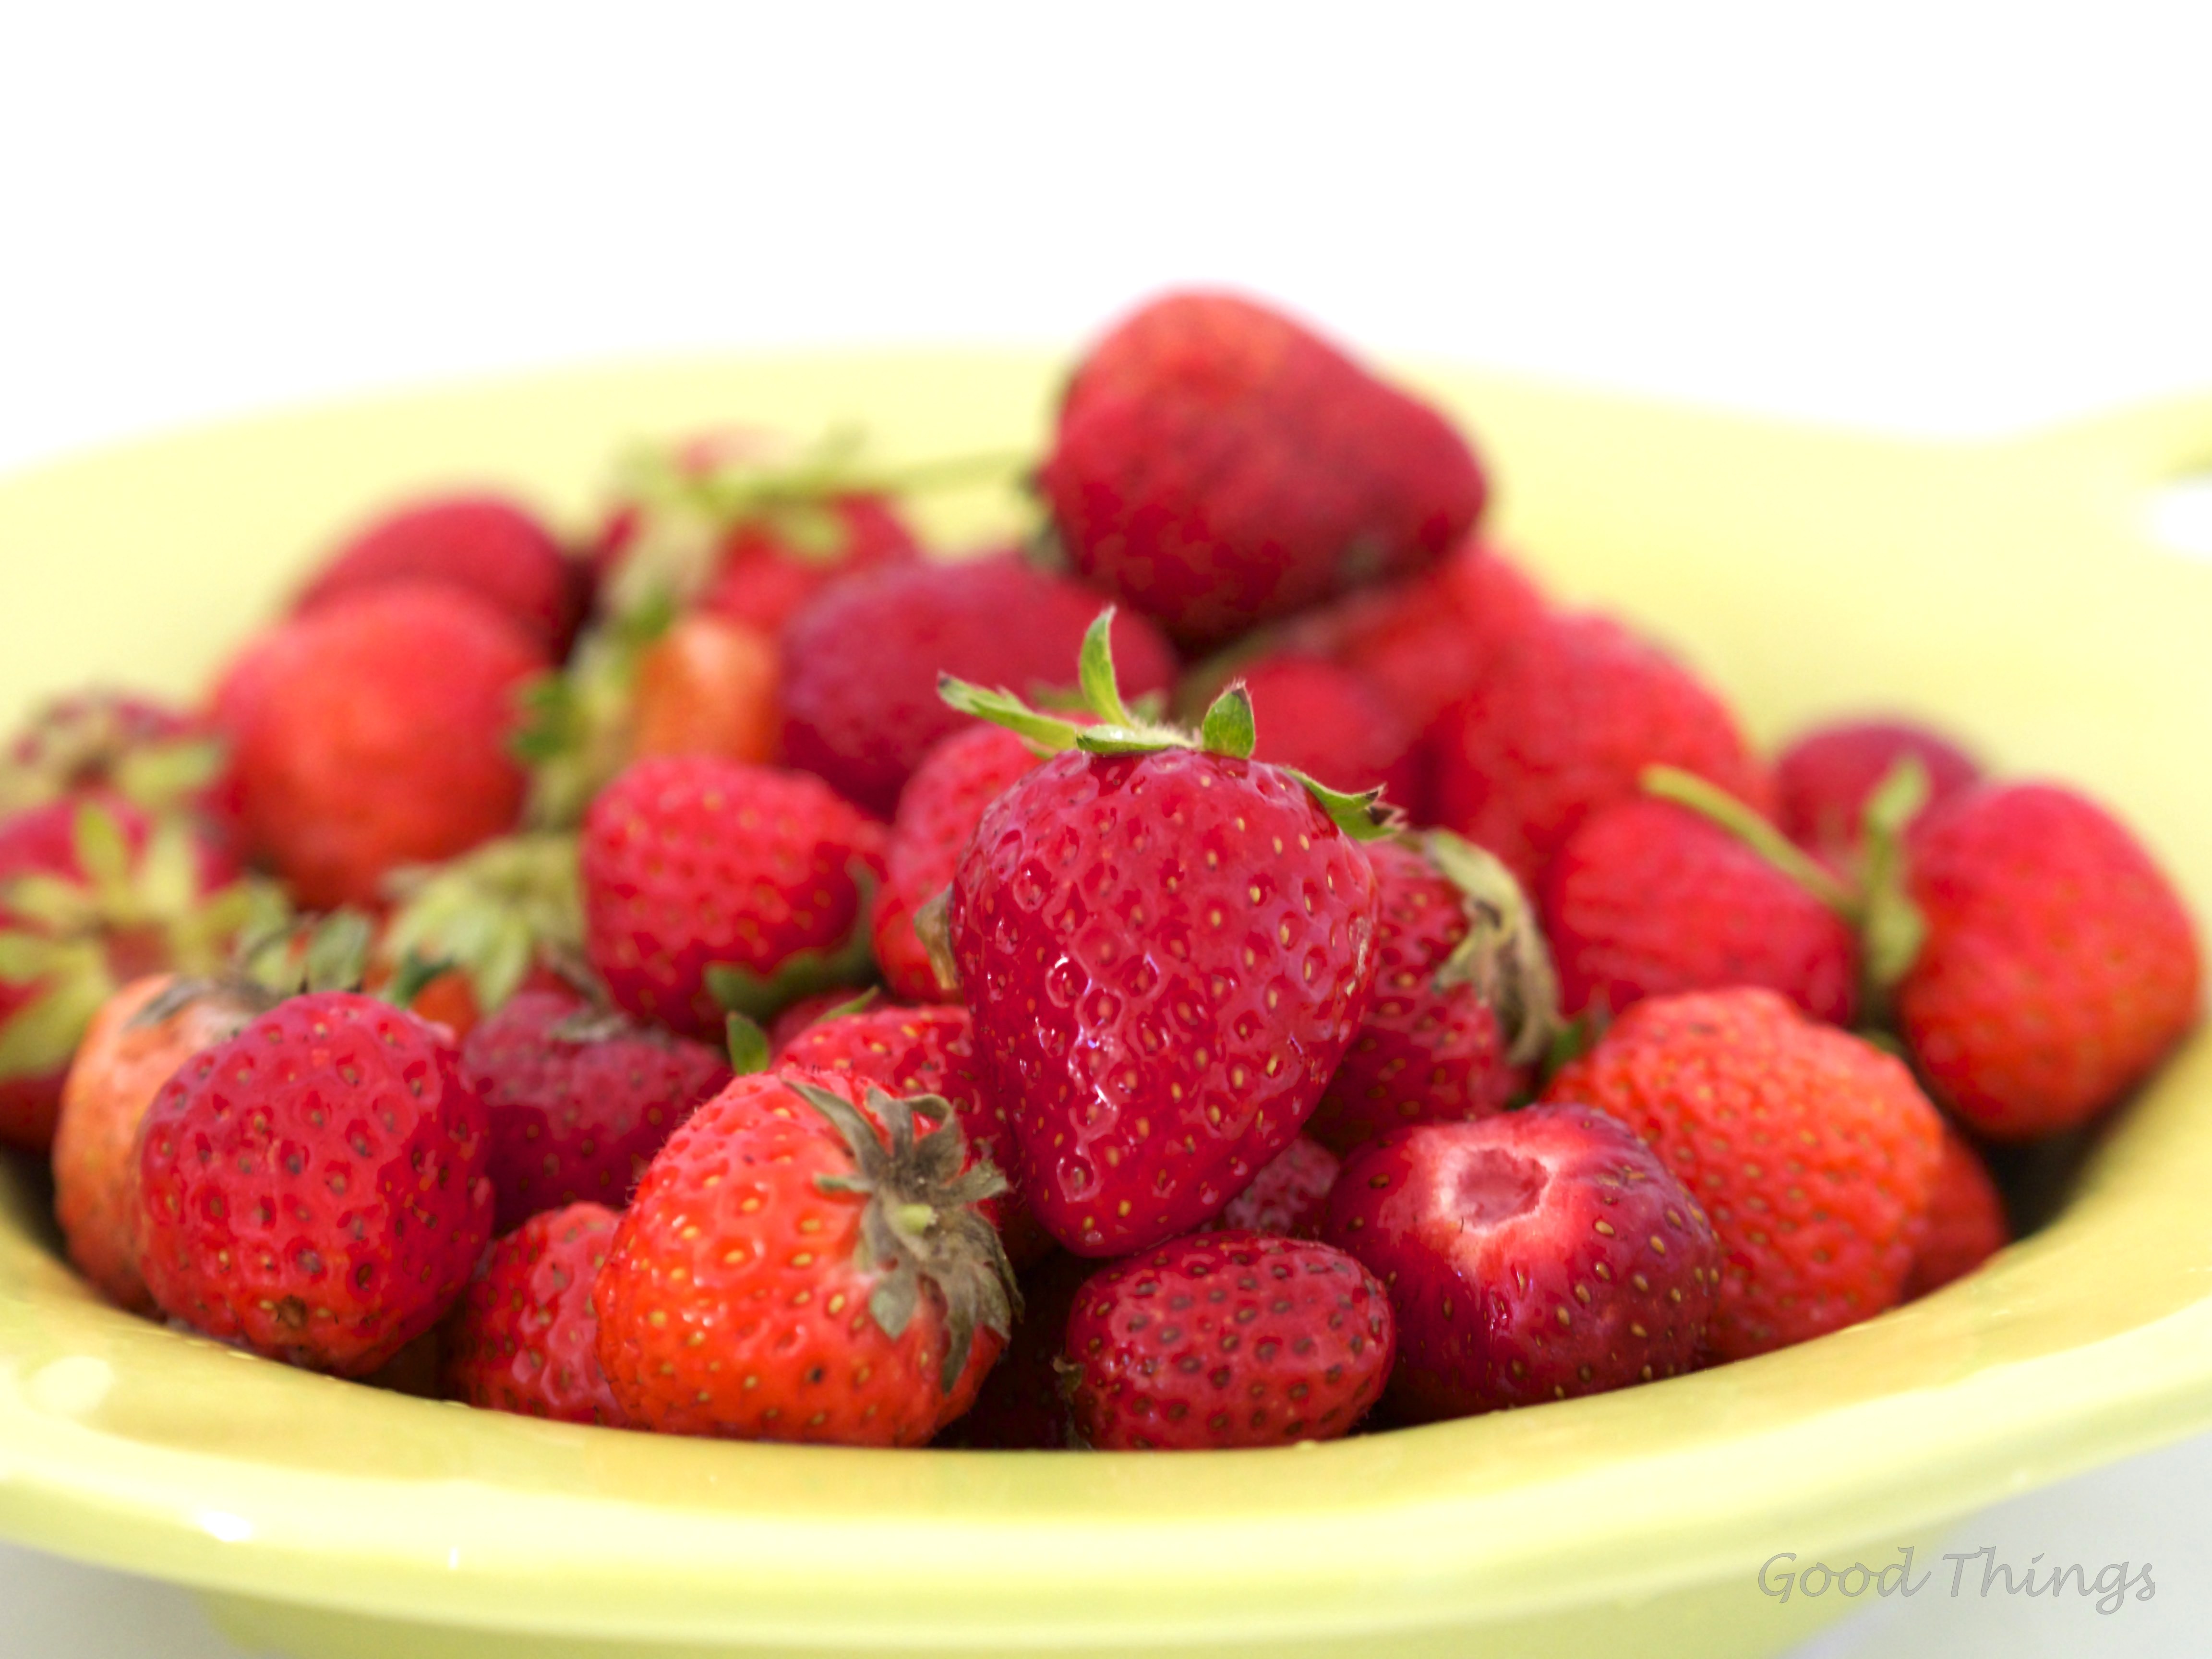 Home-grown strawberries  - Liz Posmyk, Good Things